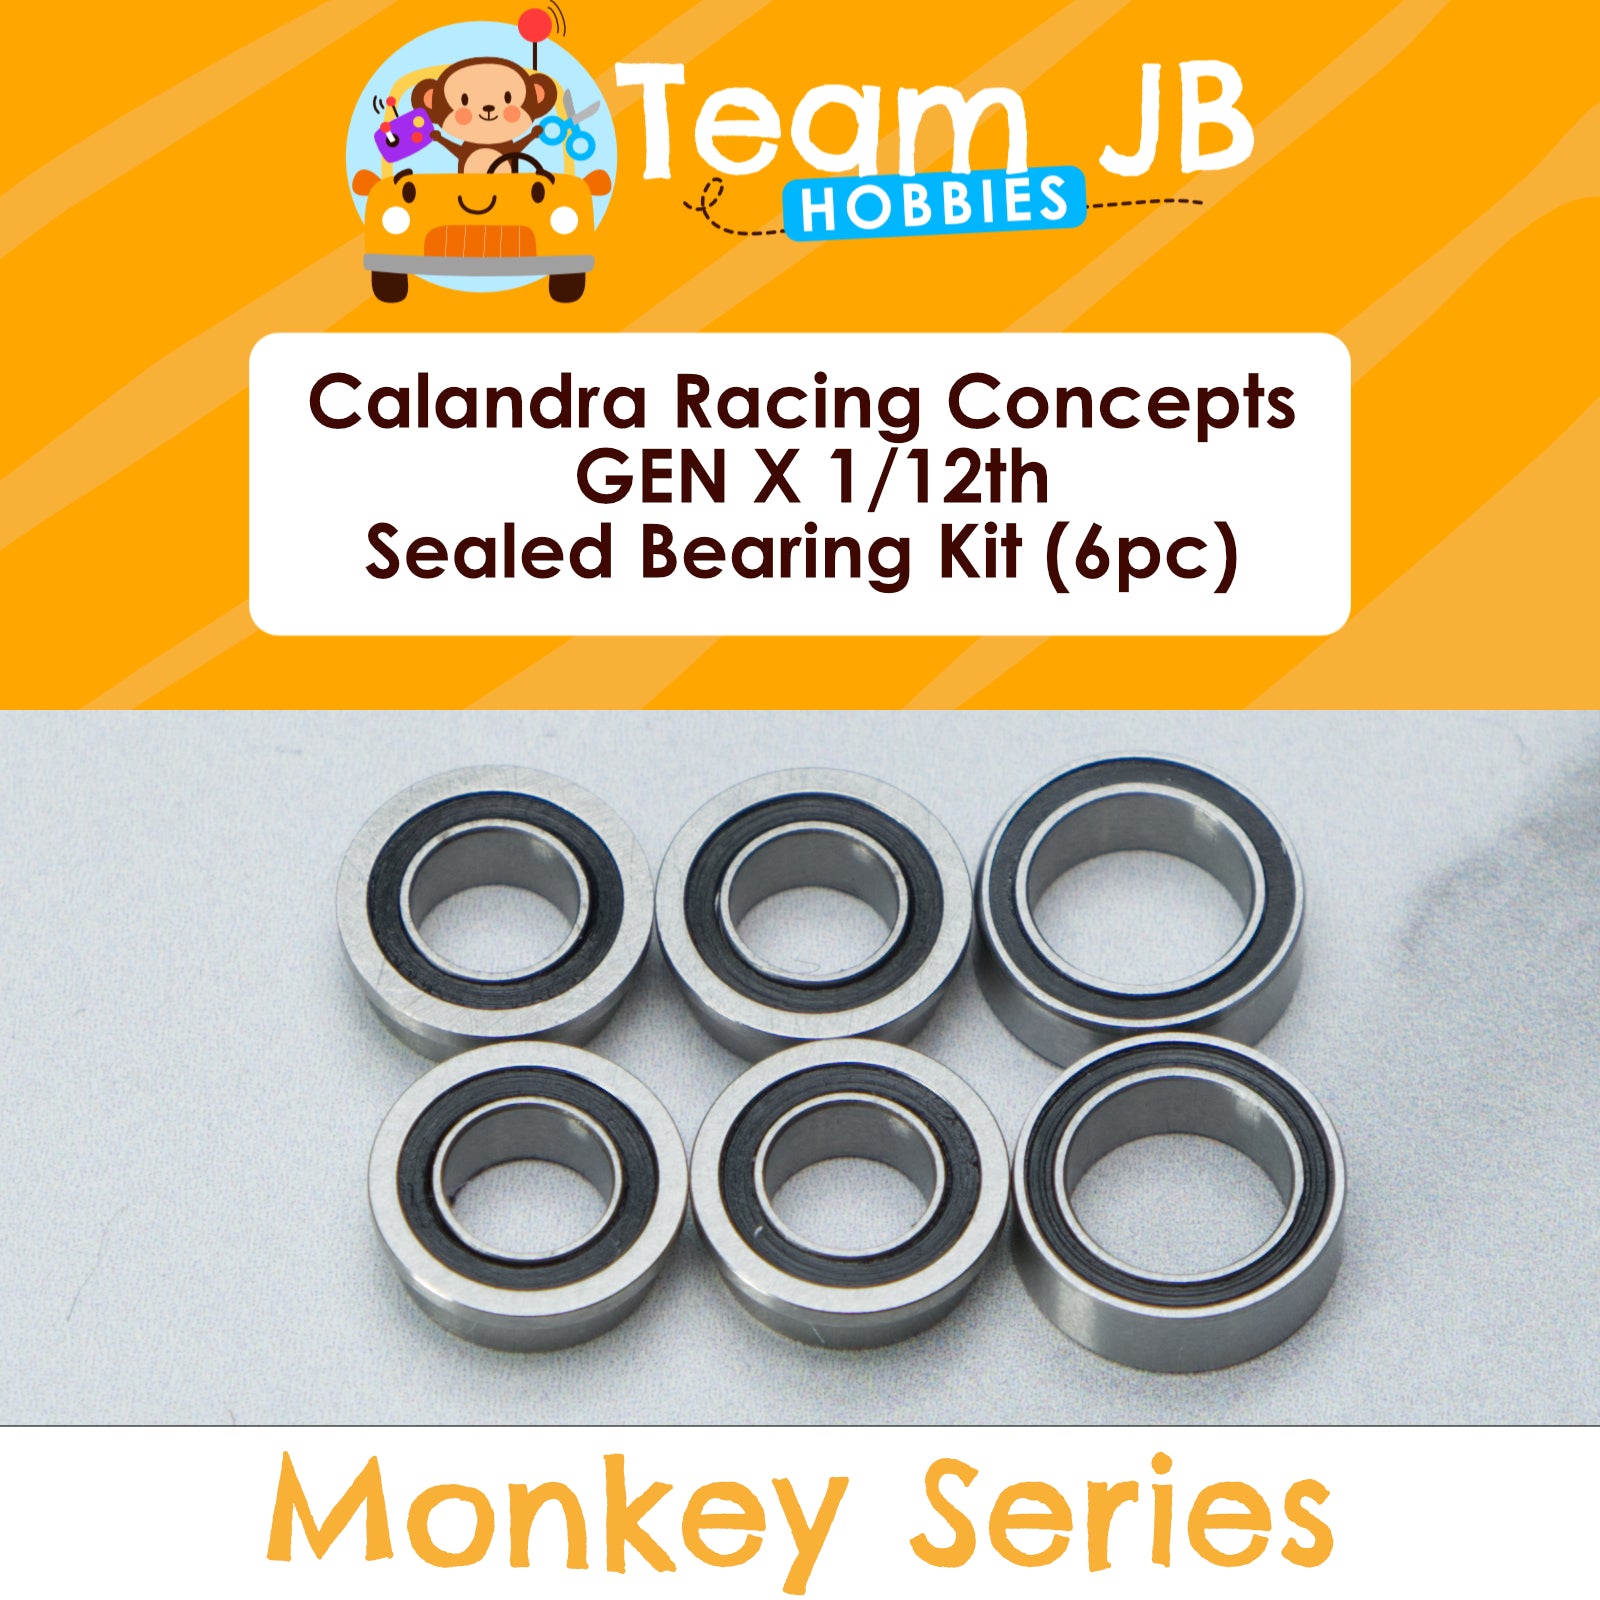 Calandra Racing Concepts GEN X 1/12th - Sealed Bearing Kit